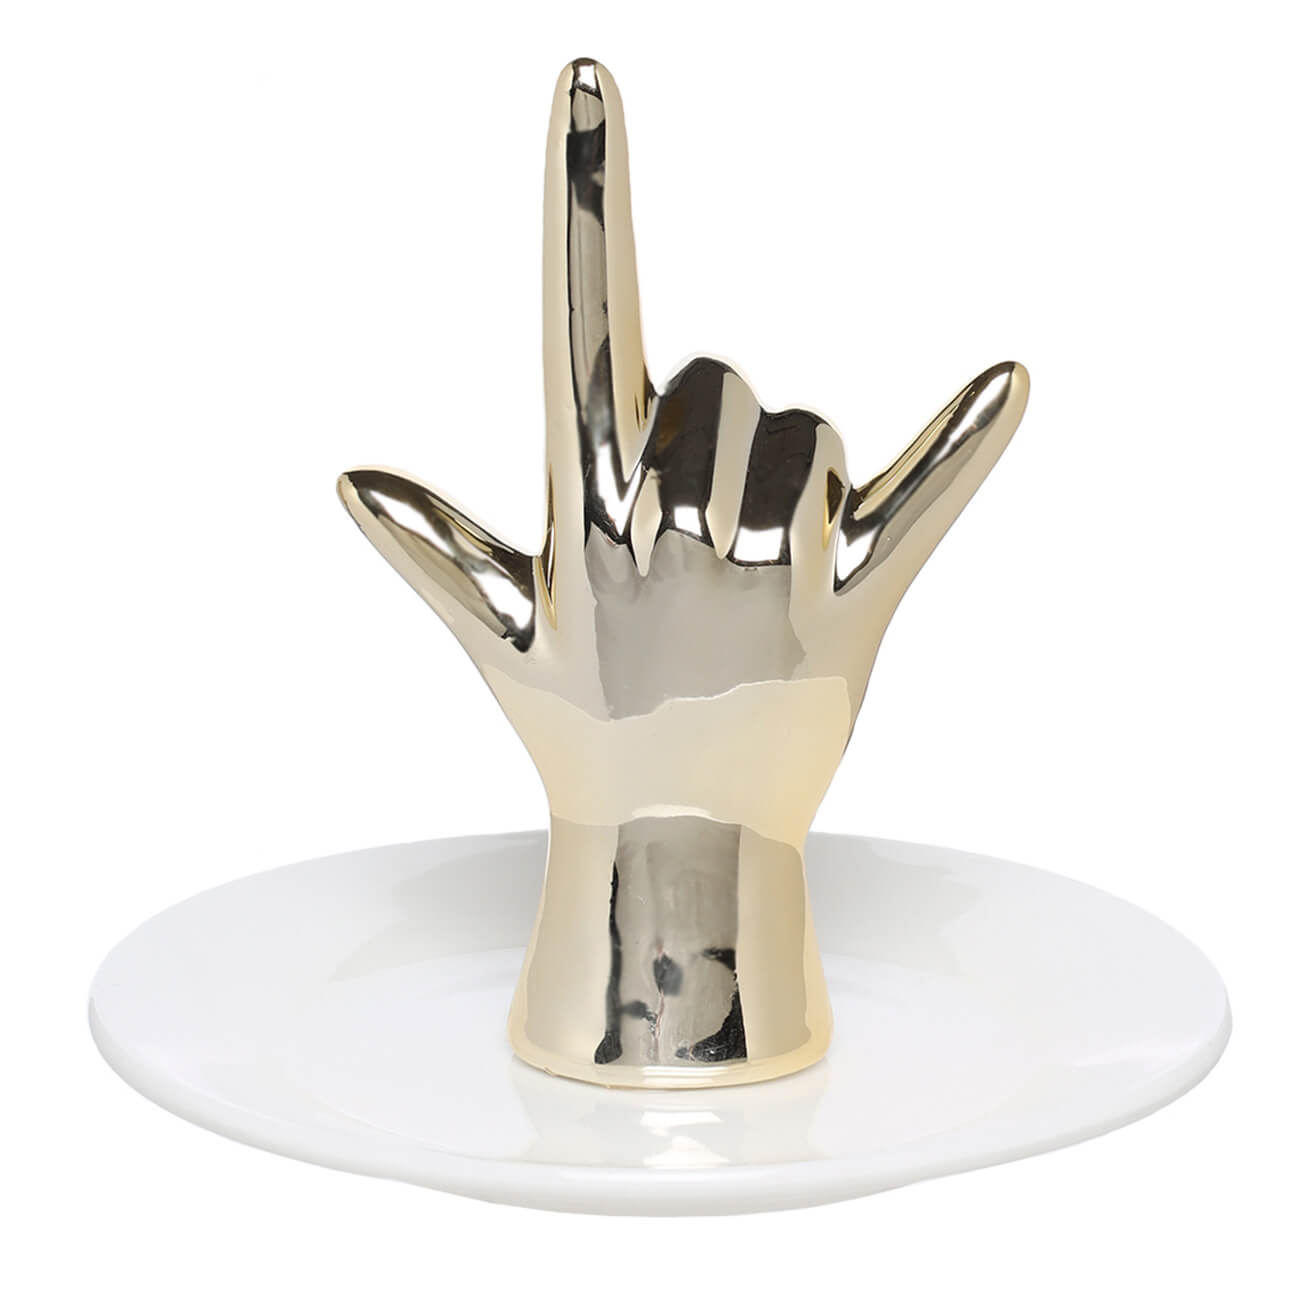 Jewelry holder, 11 cm, ceramic / metal, white and gold, Hand, Fantastic gold изображение № 1